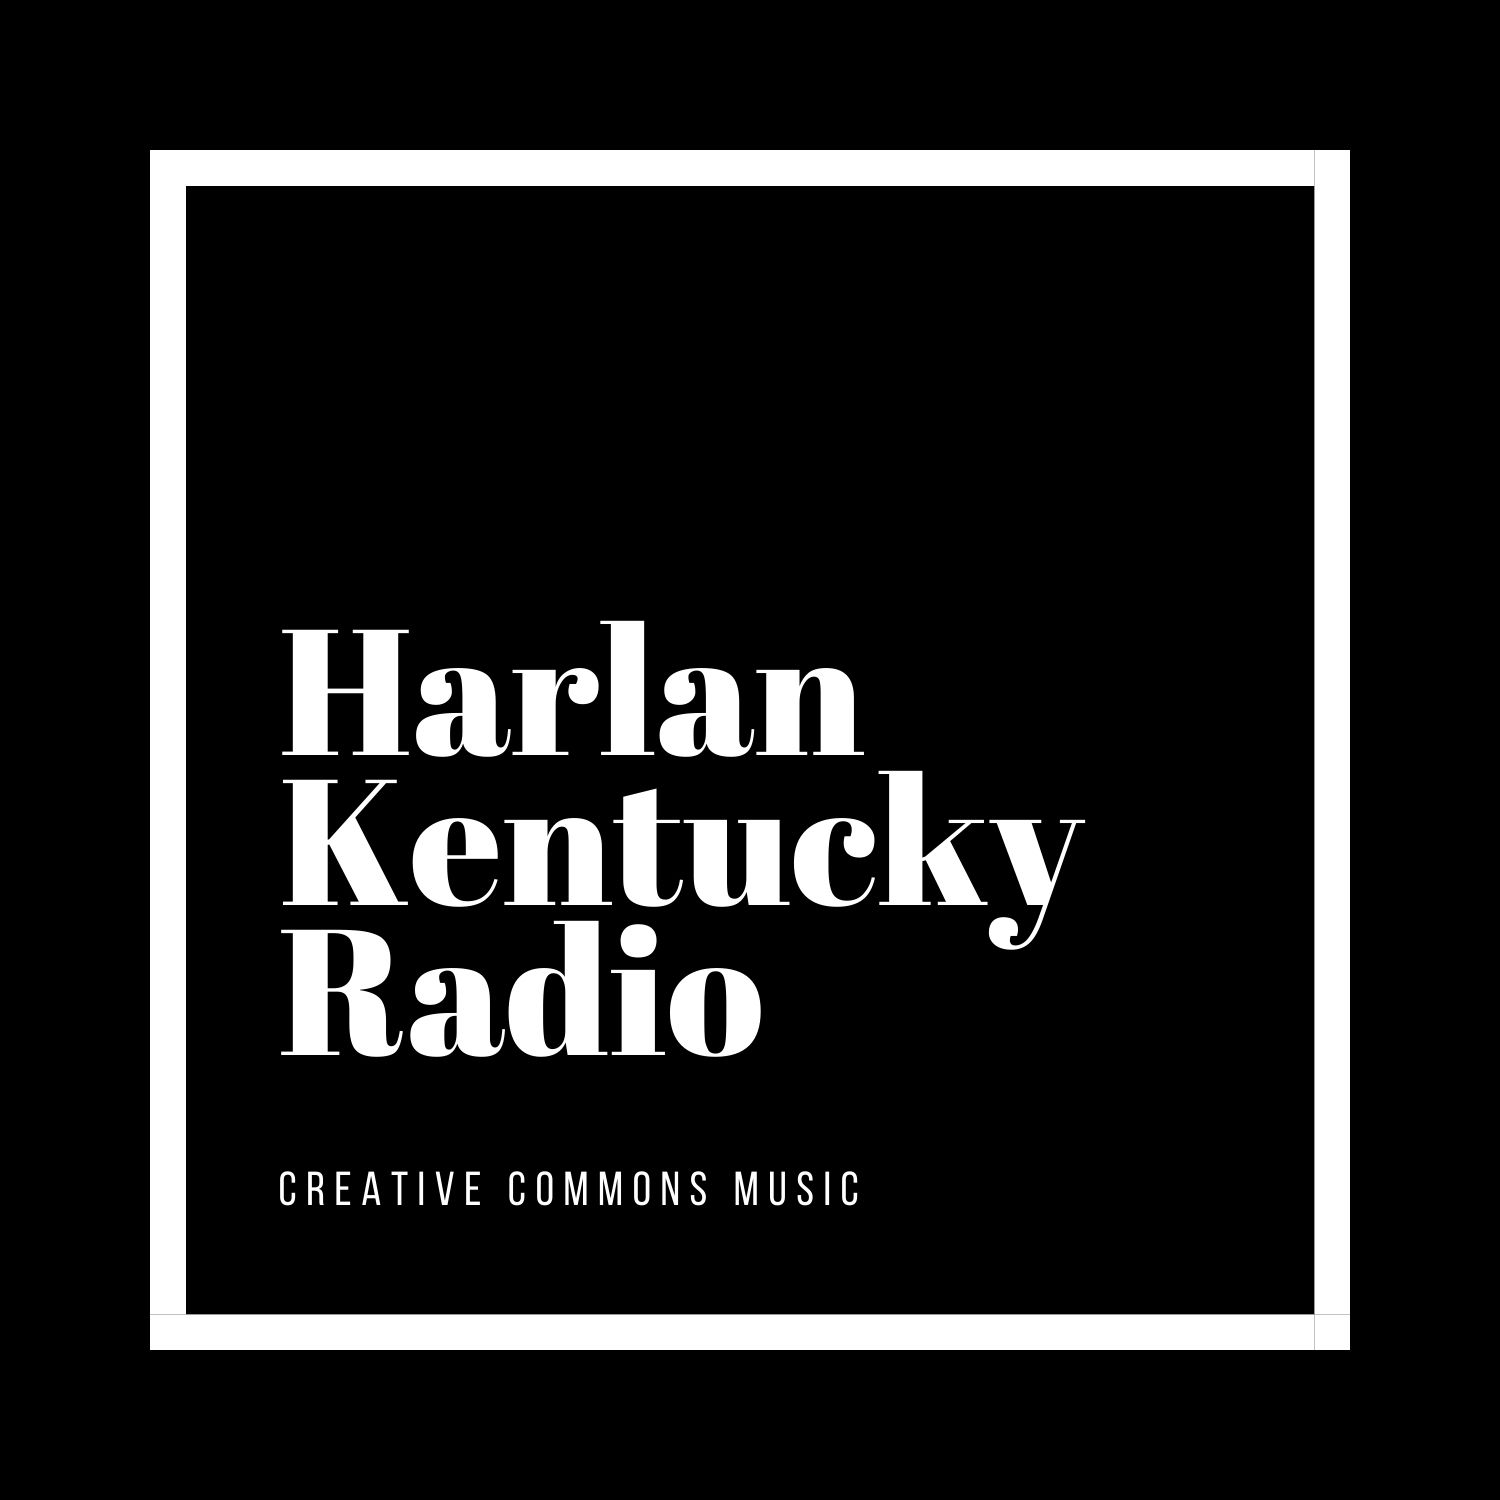 Harlan Kentucky Rock Radio